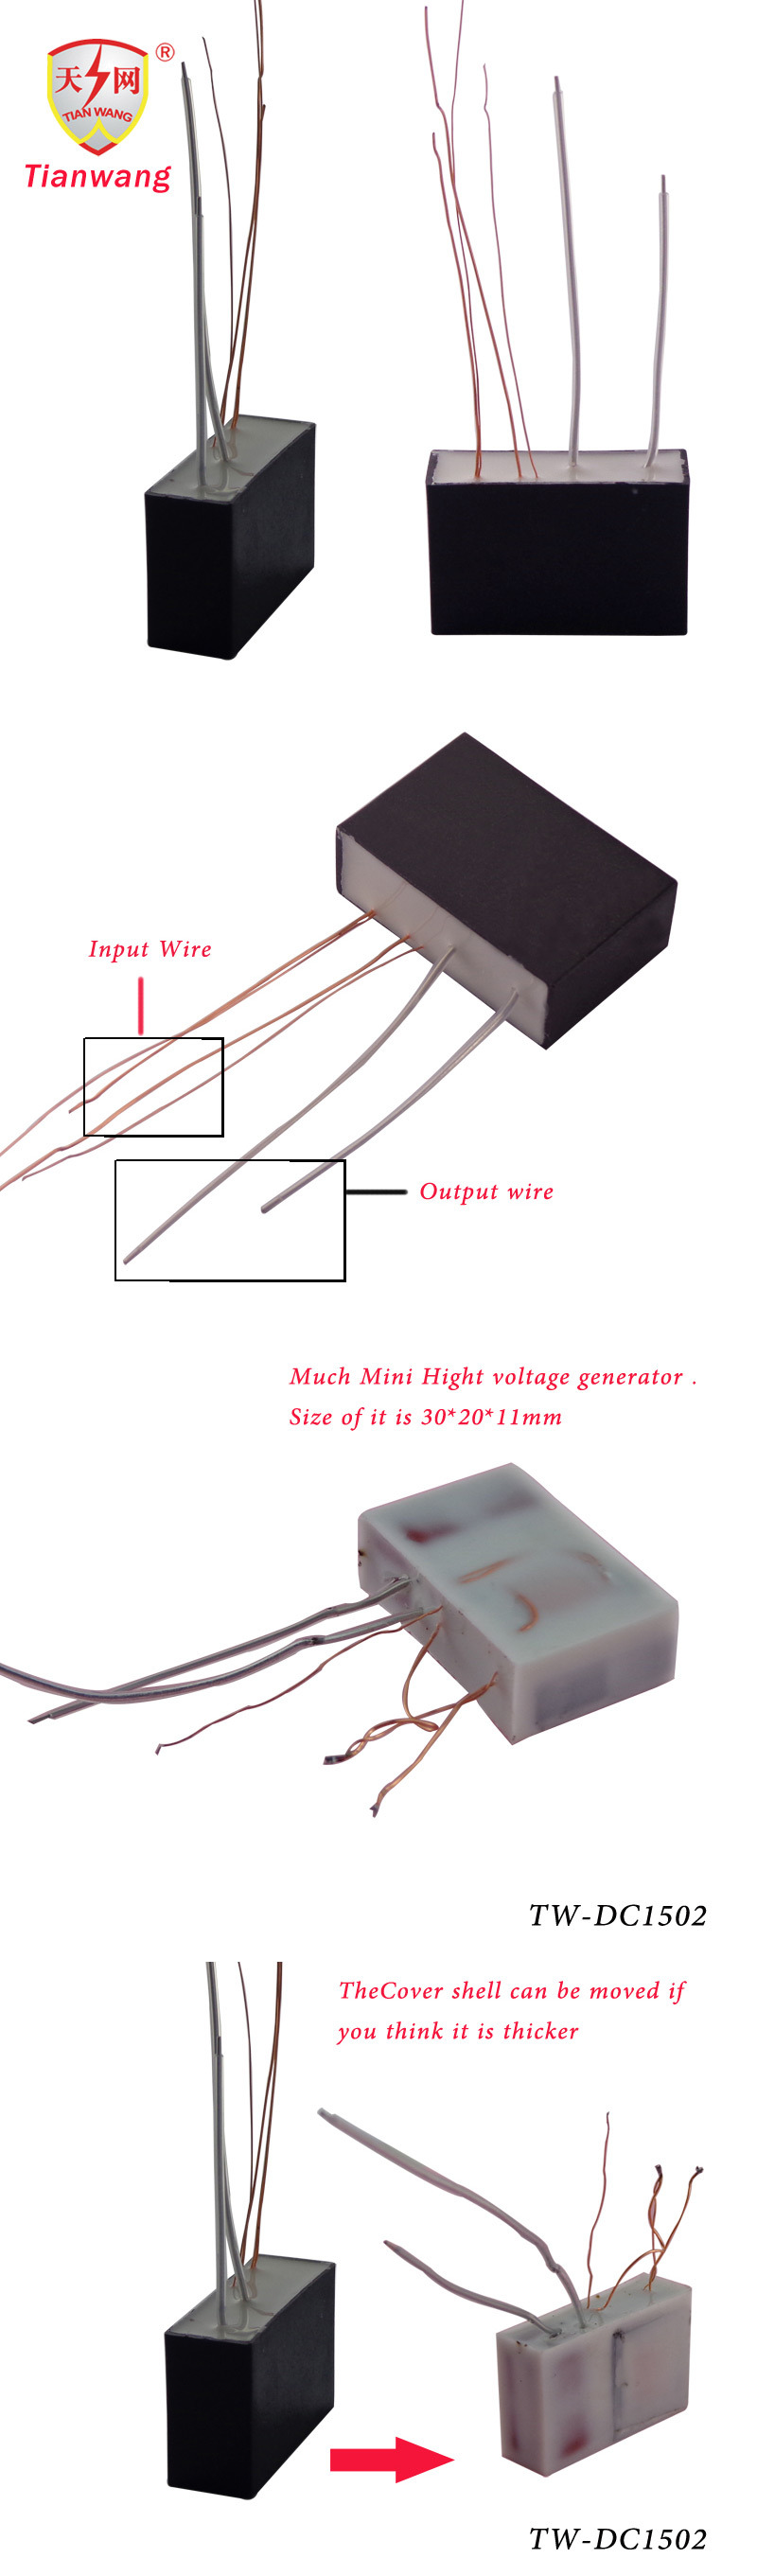 2018 Miniature High Voltage Generator for Self Defense